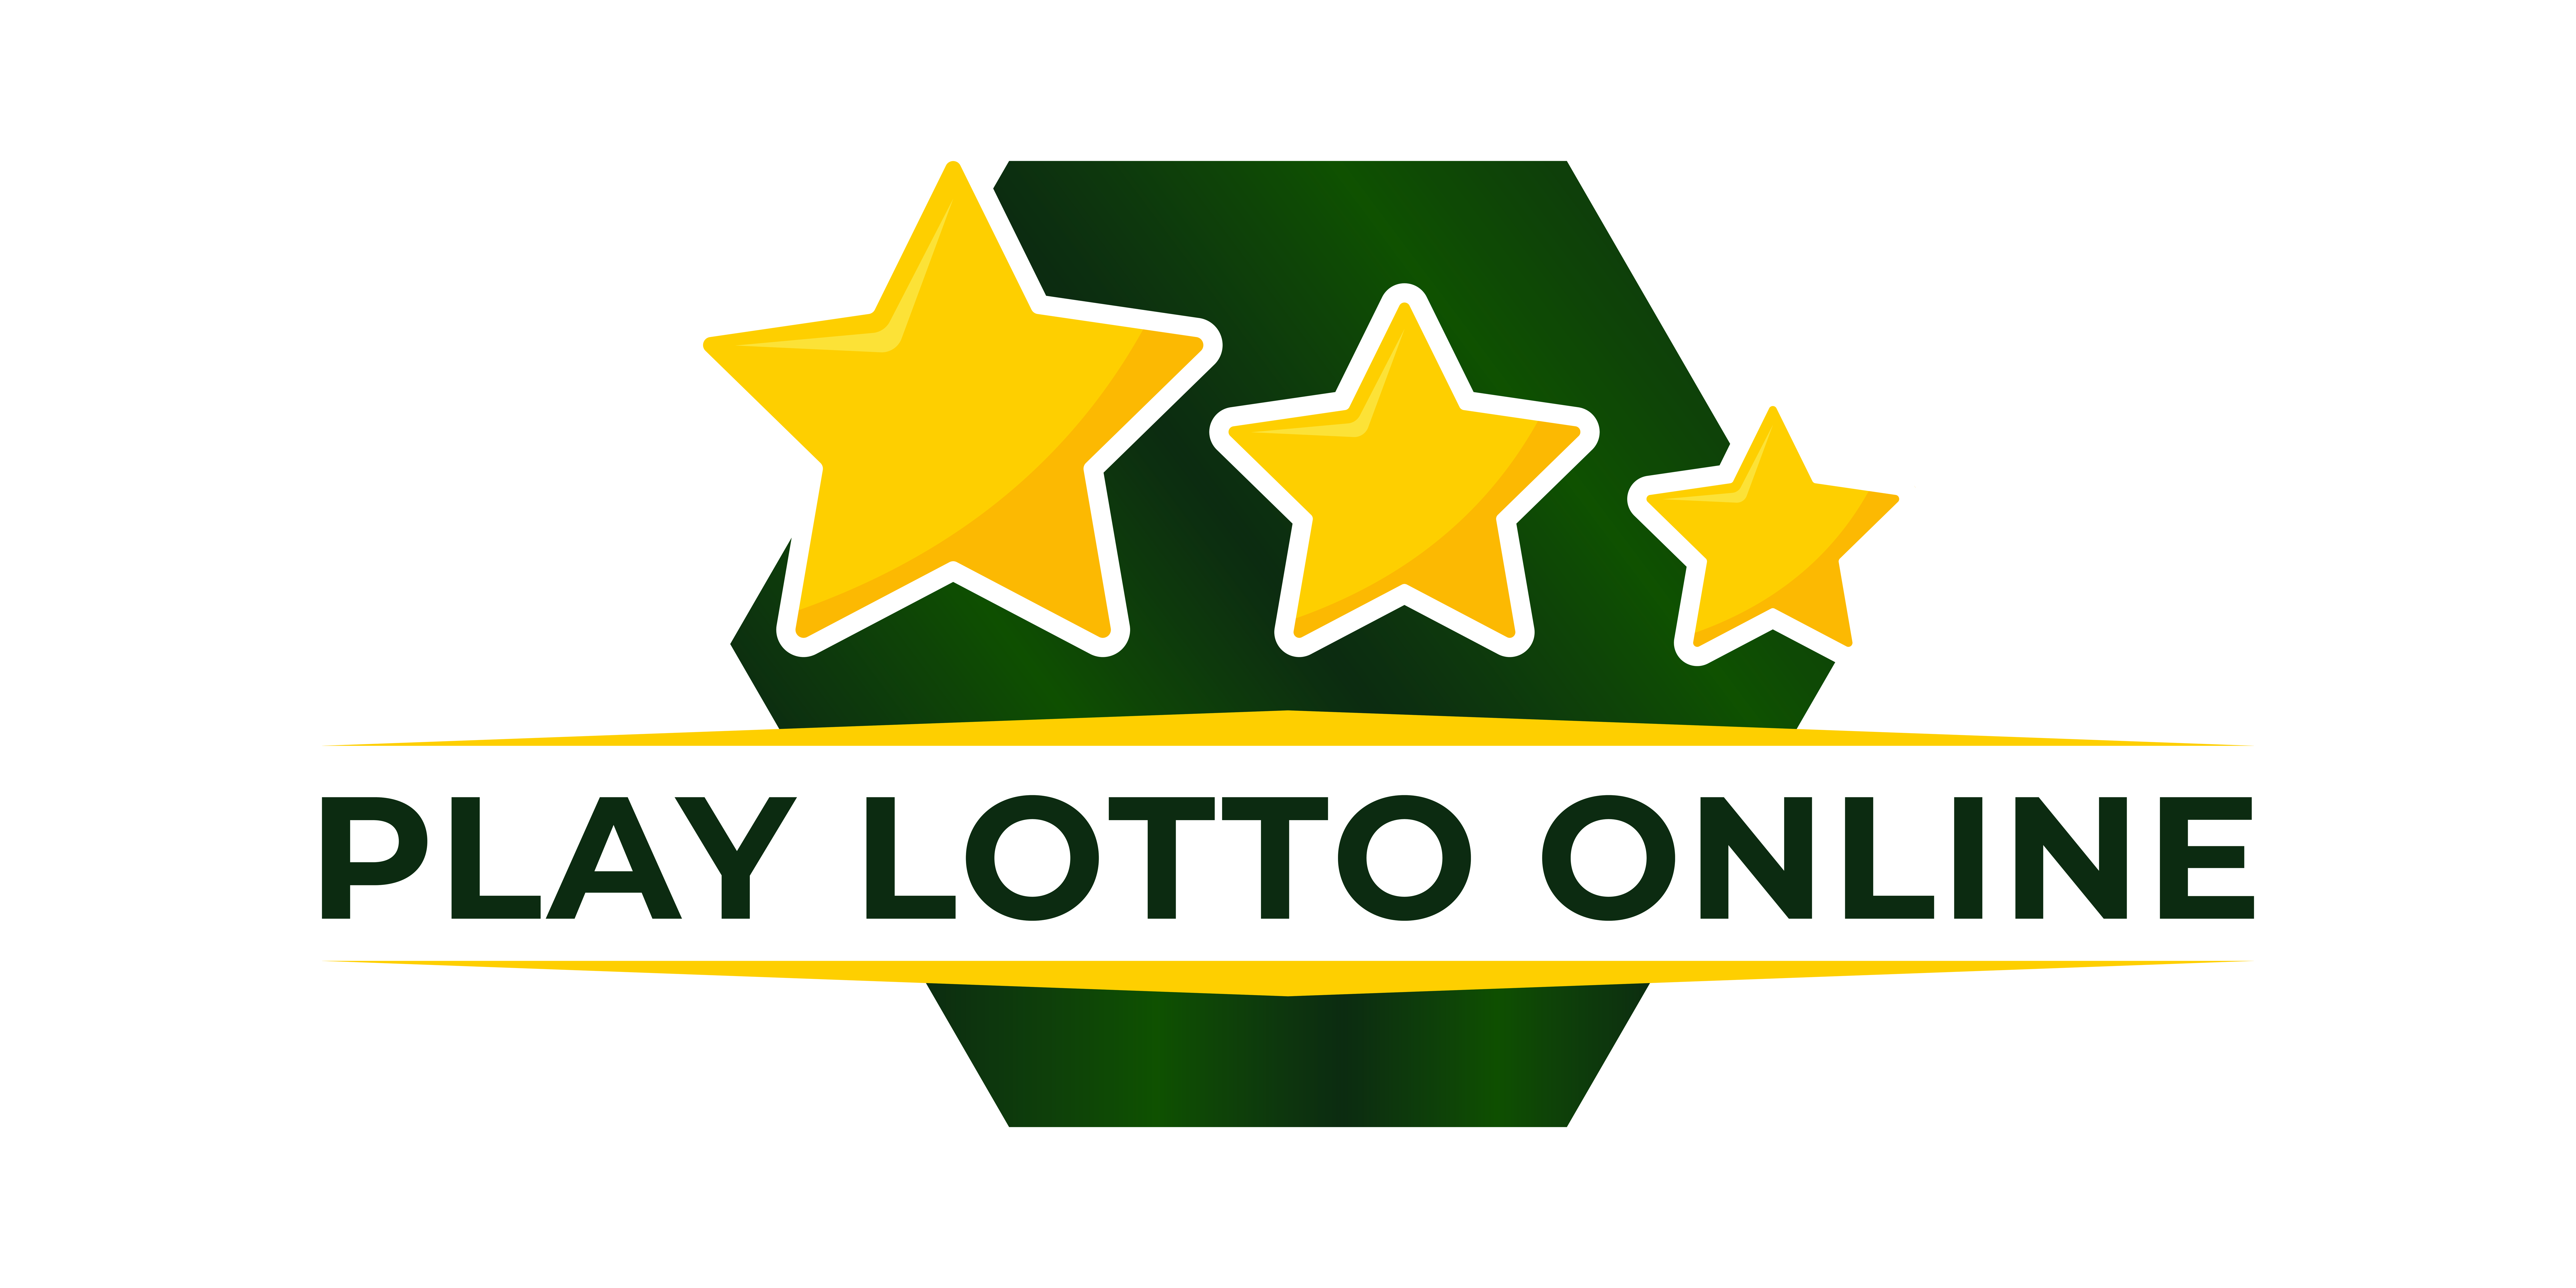 Spela Lotto online

